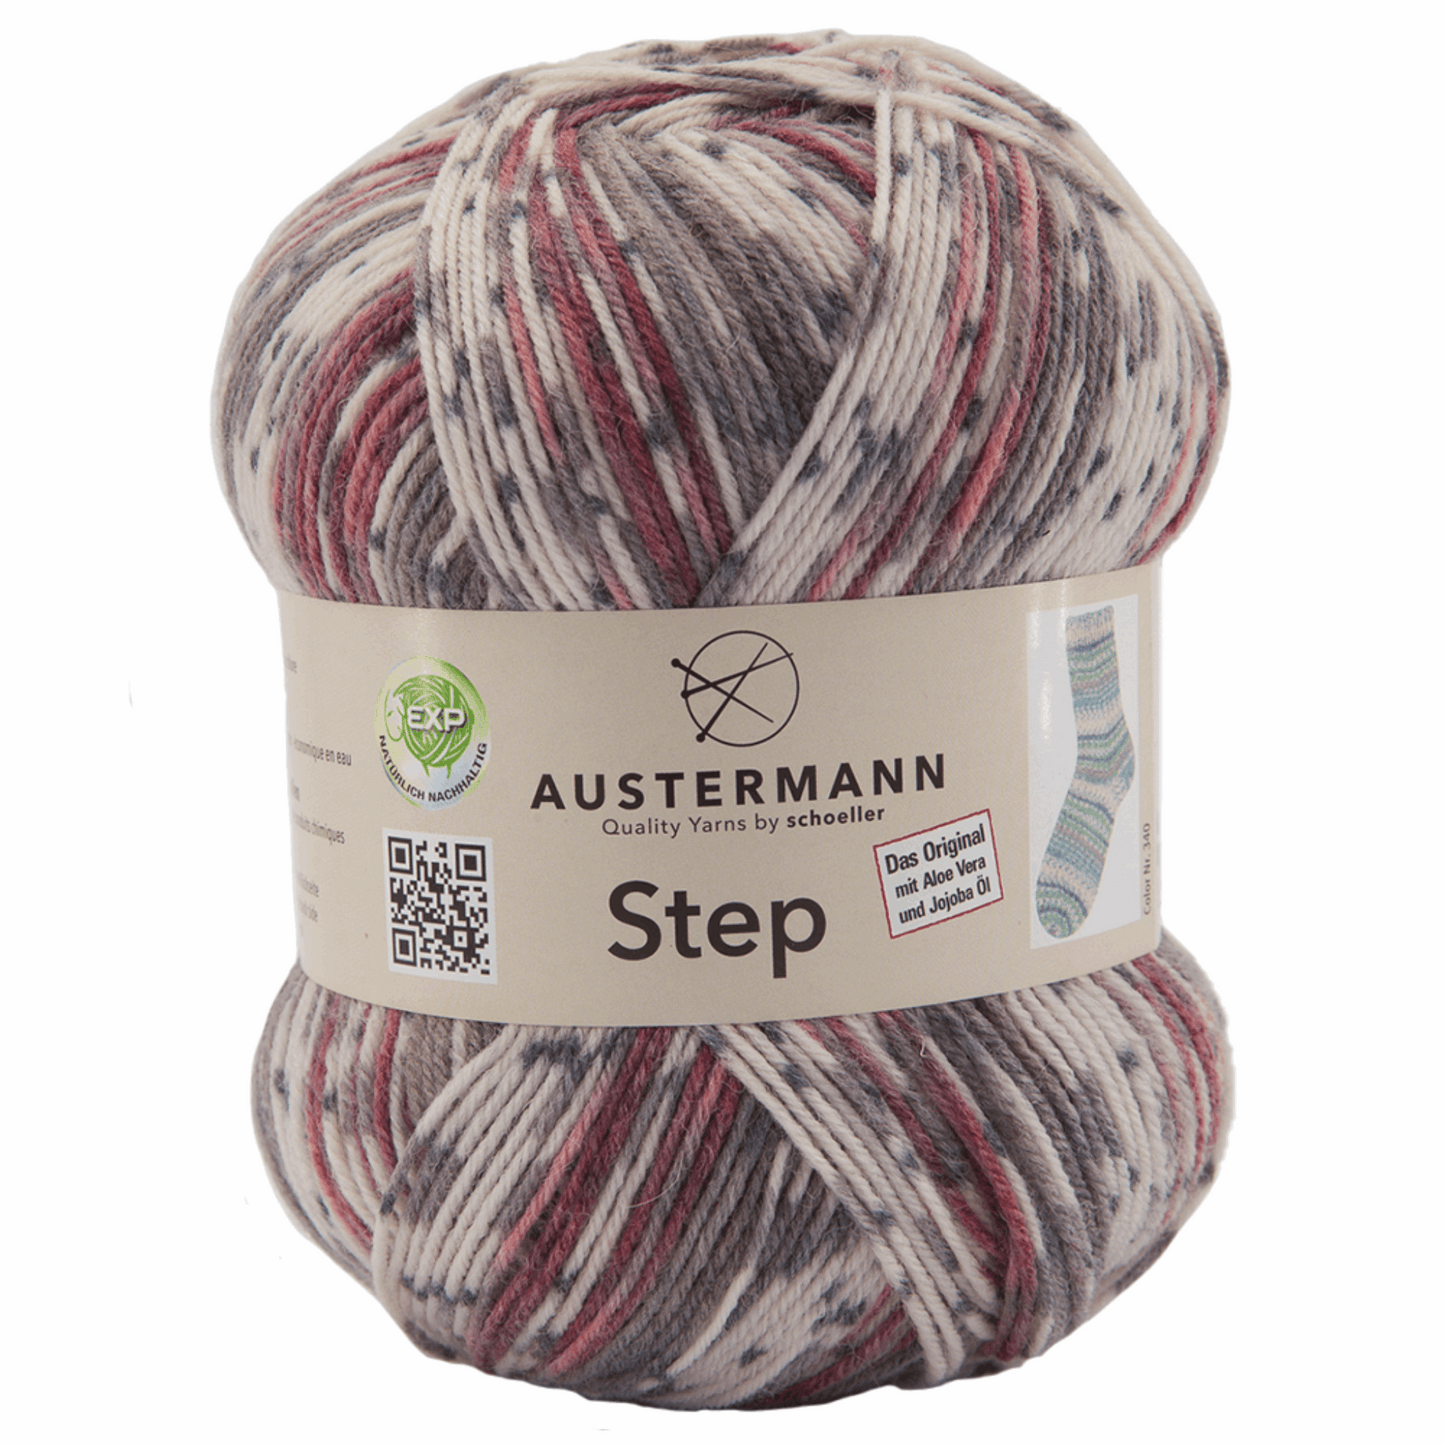 Austermann Step 4F Color 100g, 97689, Farbe taiga 43